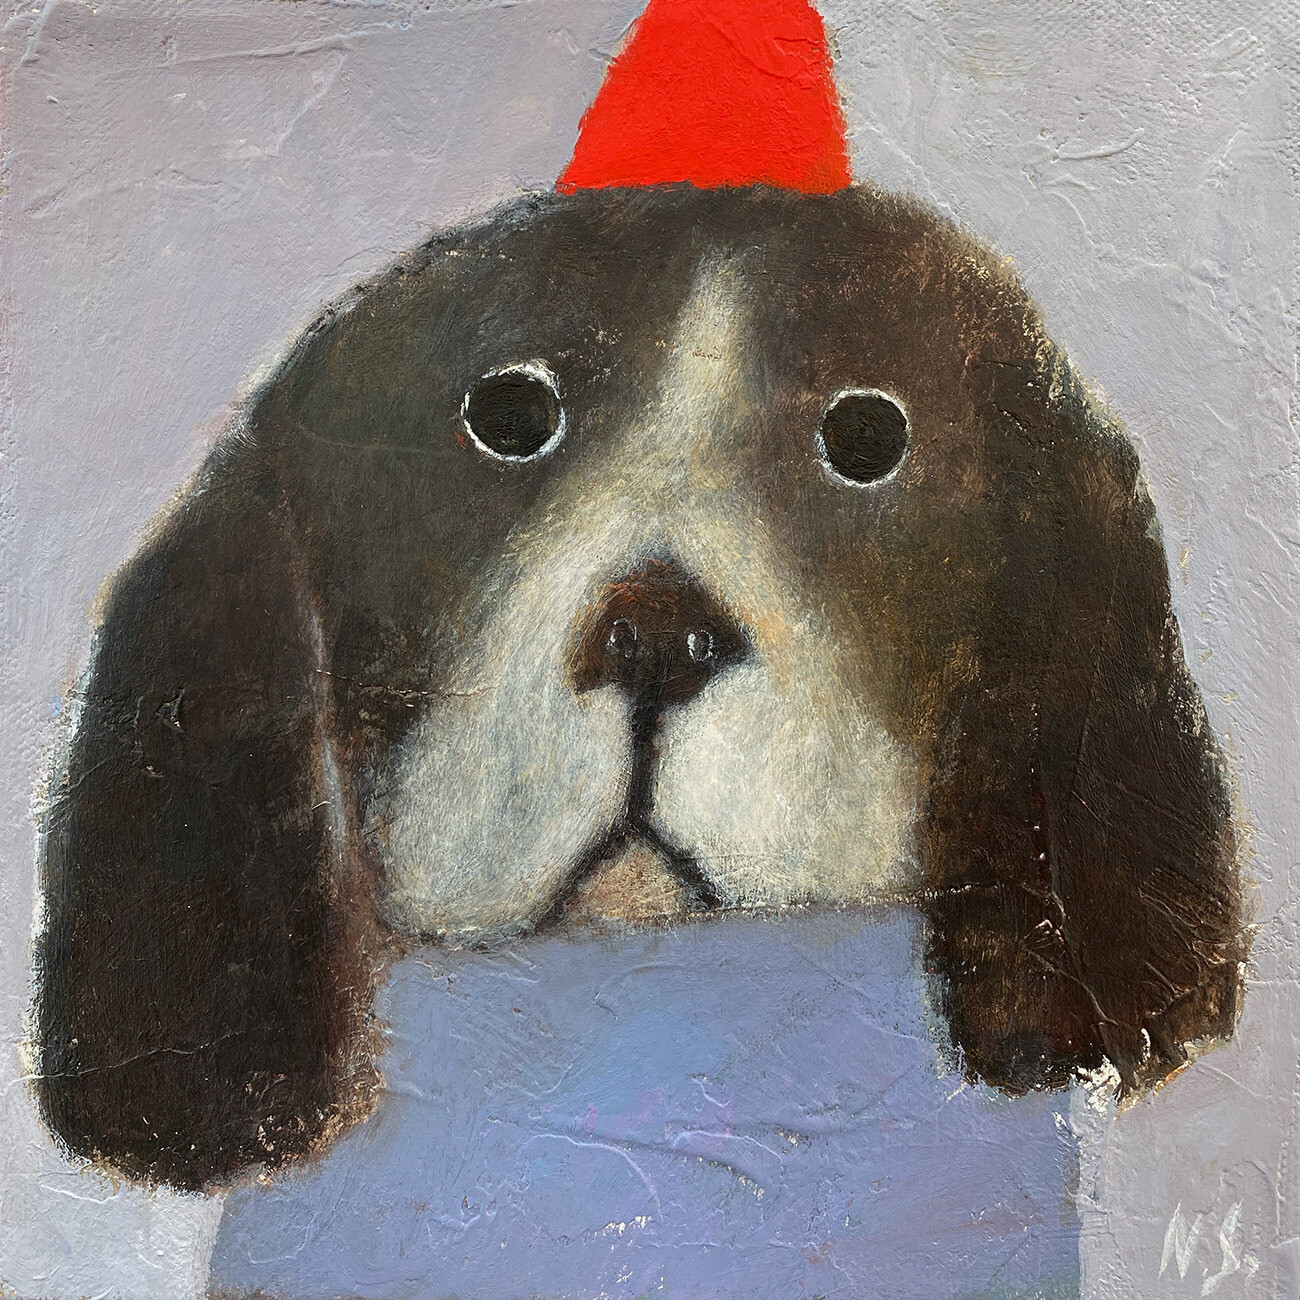 A Dreamy Dog in the Red Hat – Original